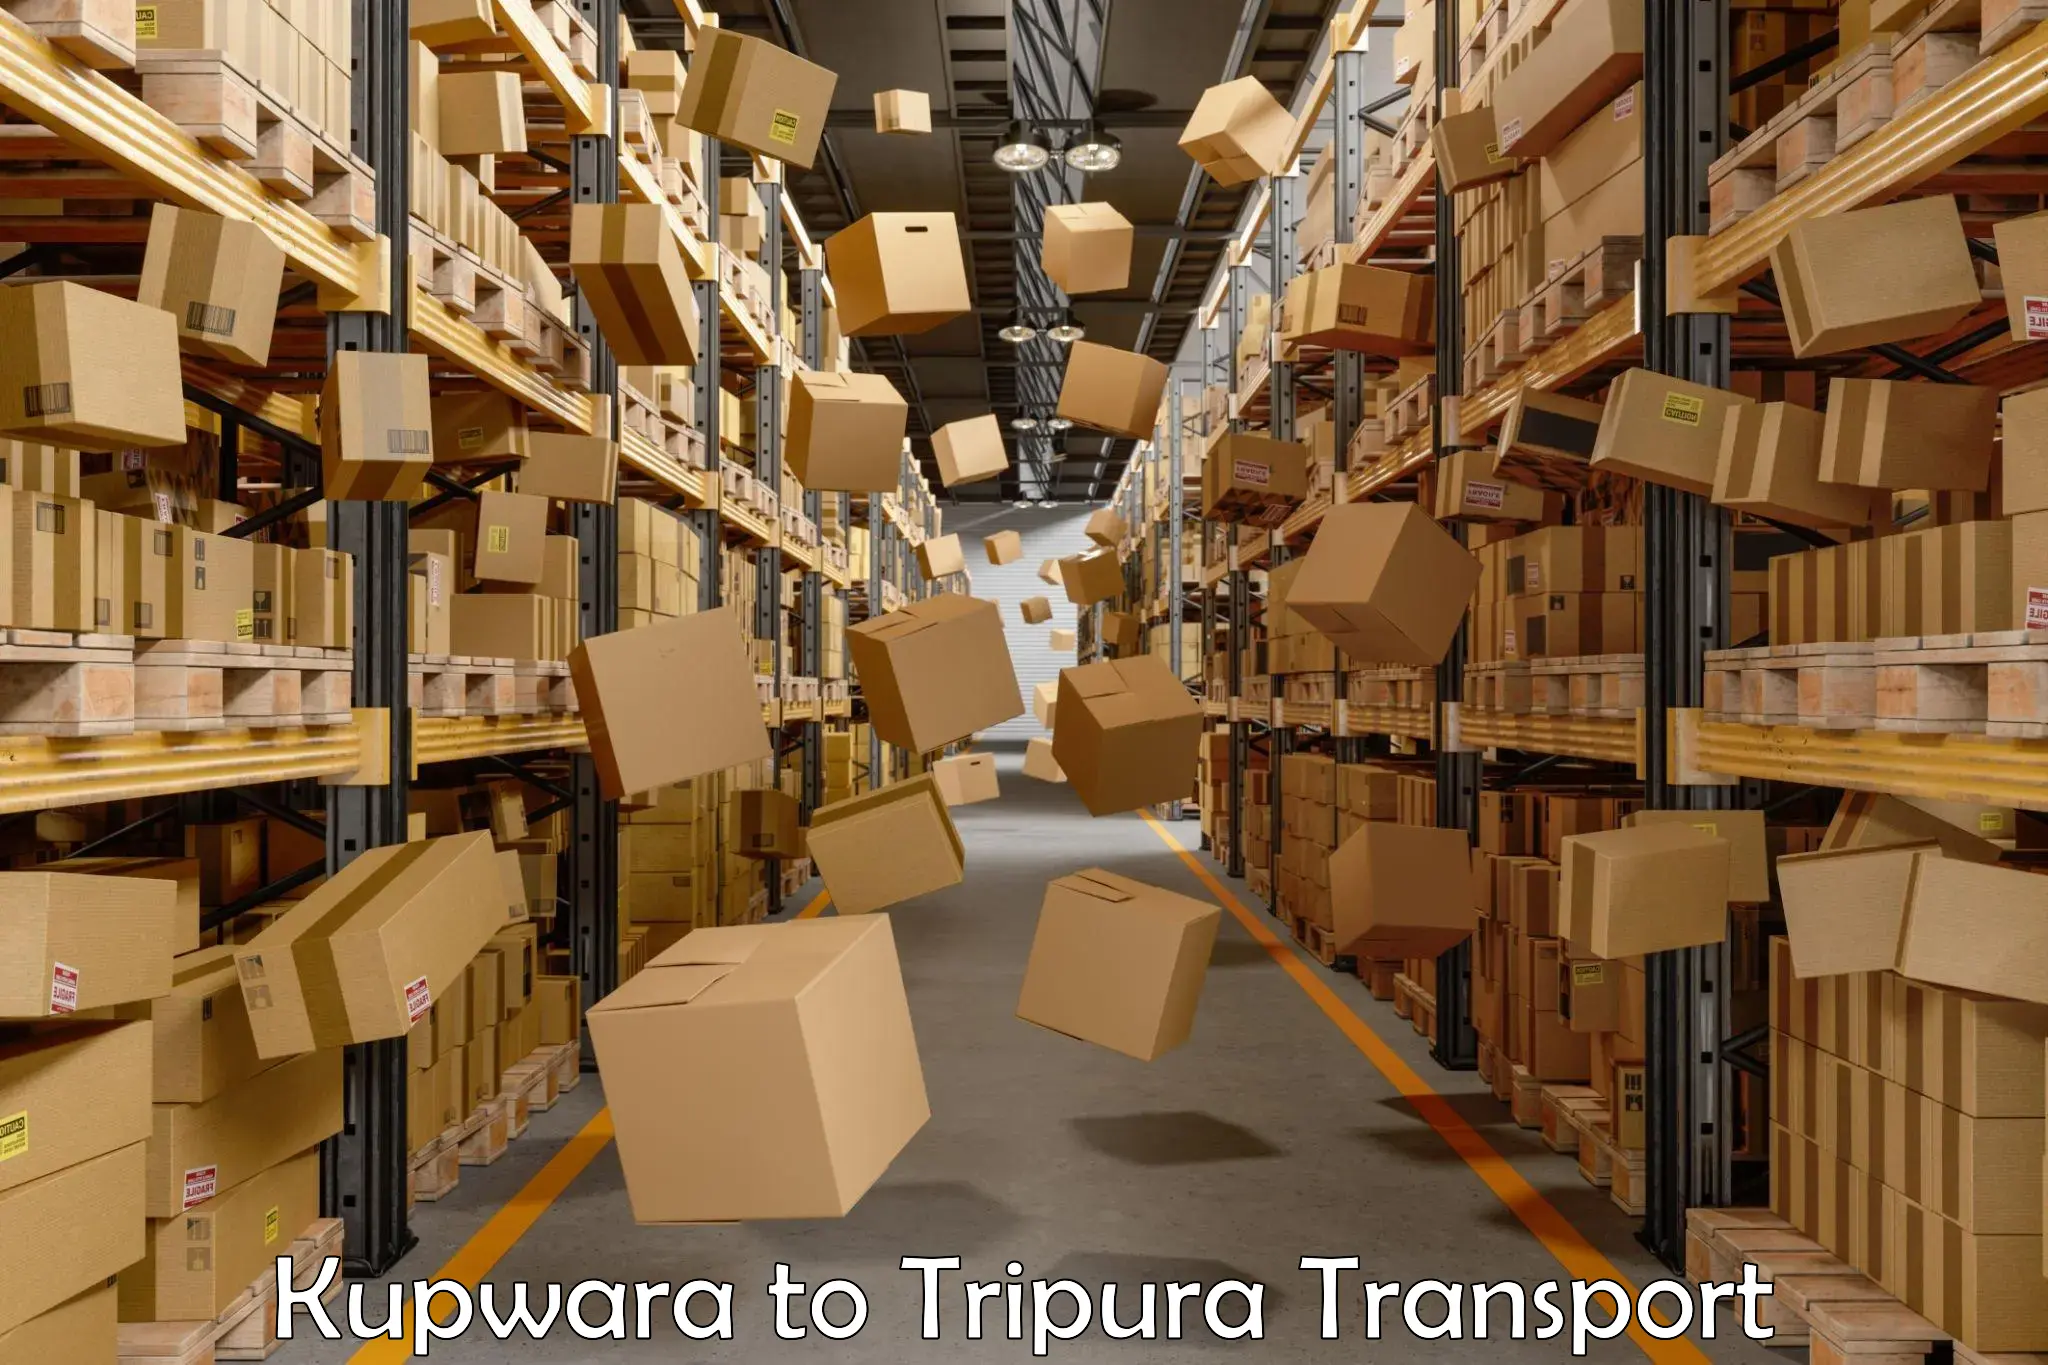 Transport shared services Kupwara to Udaipur Tripura